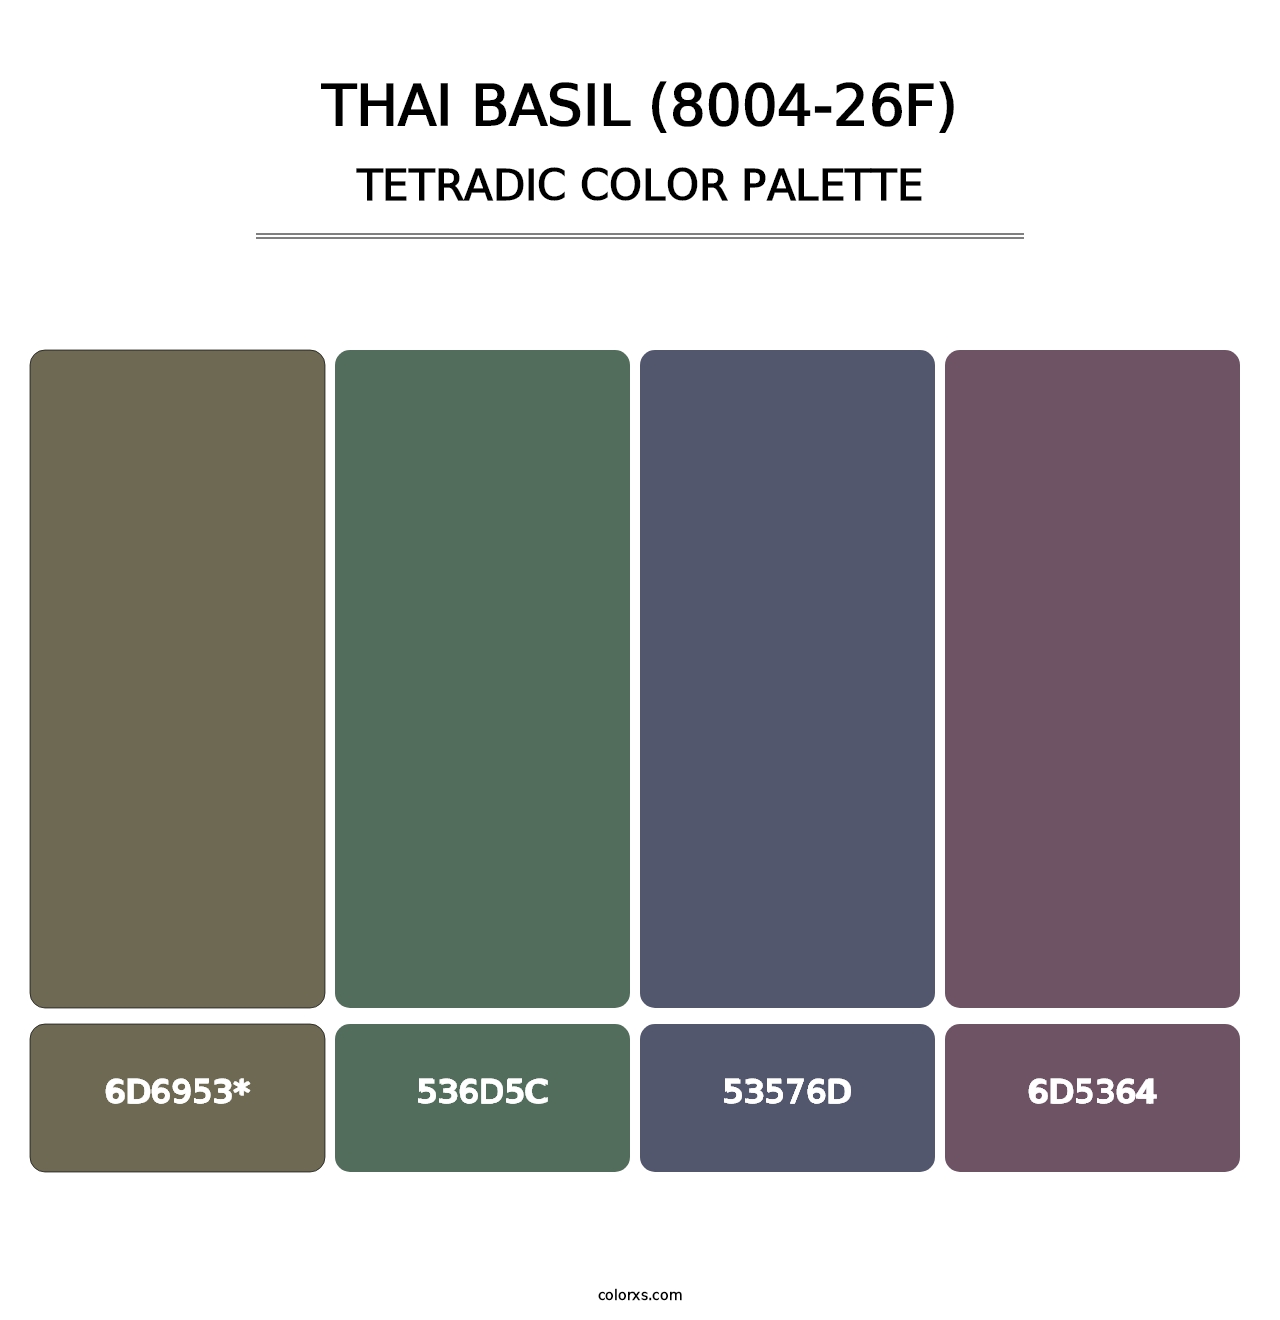 Thai Basil (8004-26F) - Tetradic Color Palette